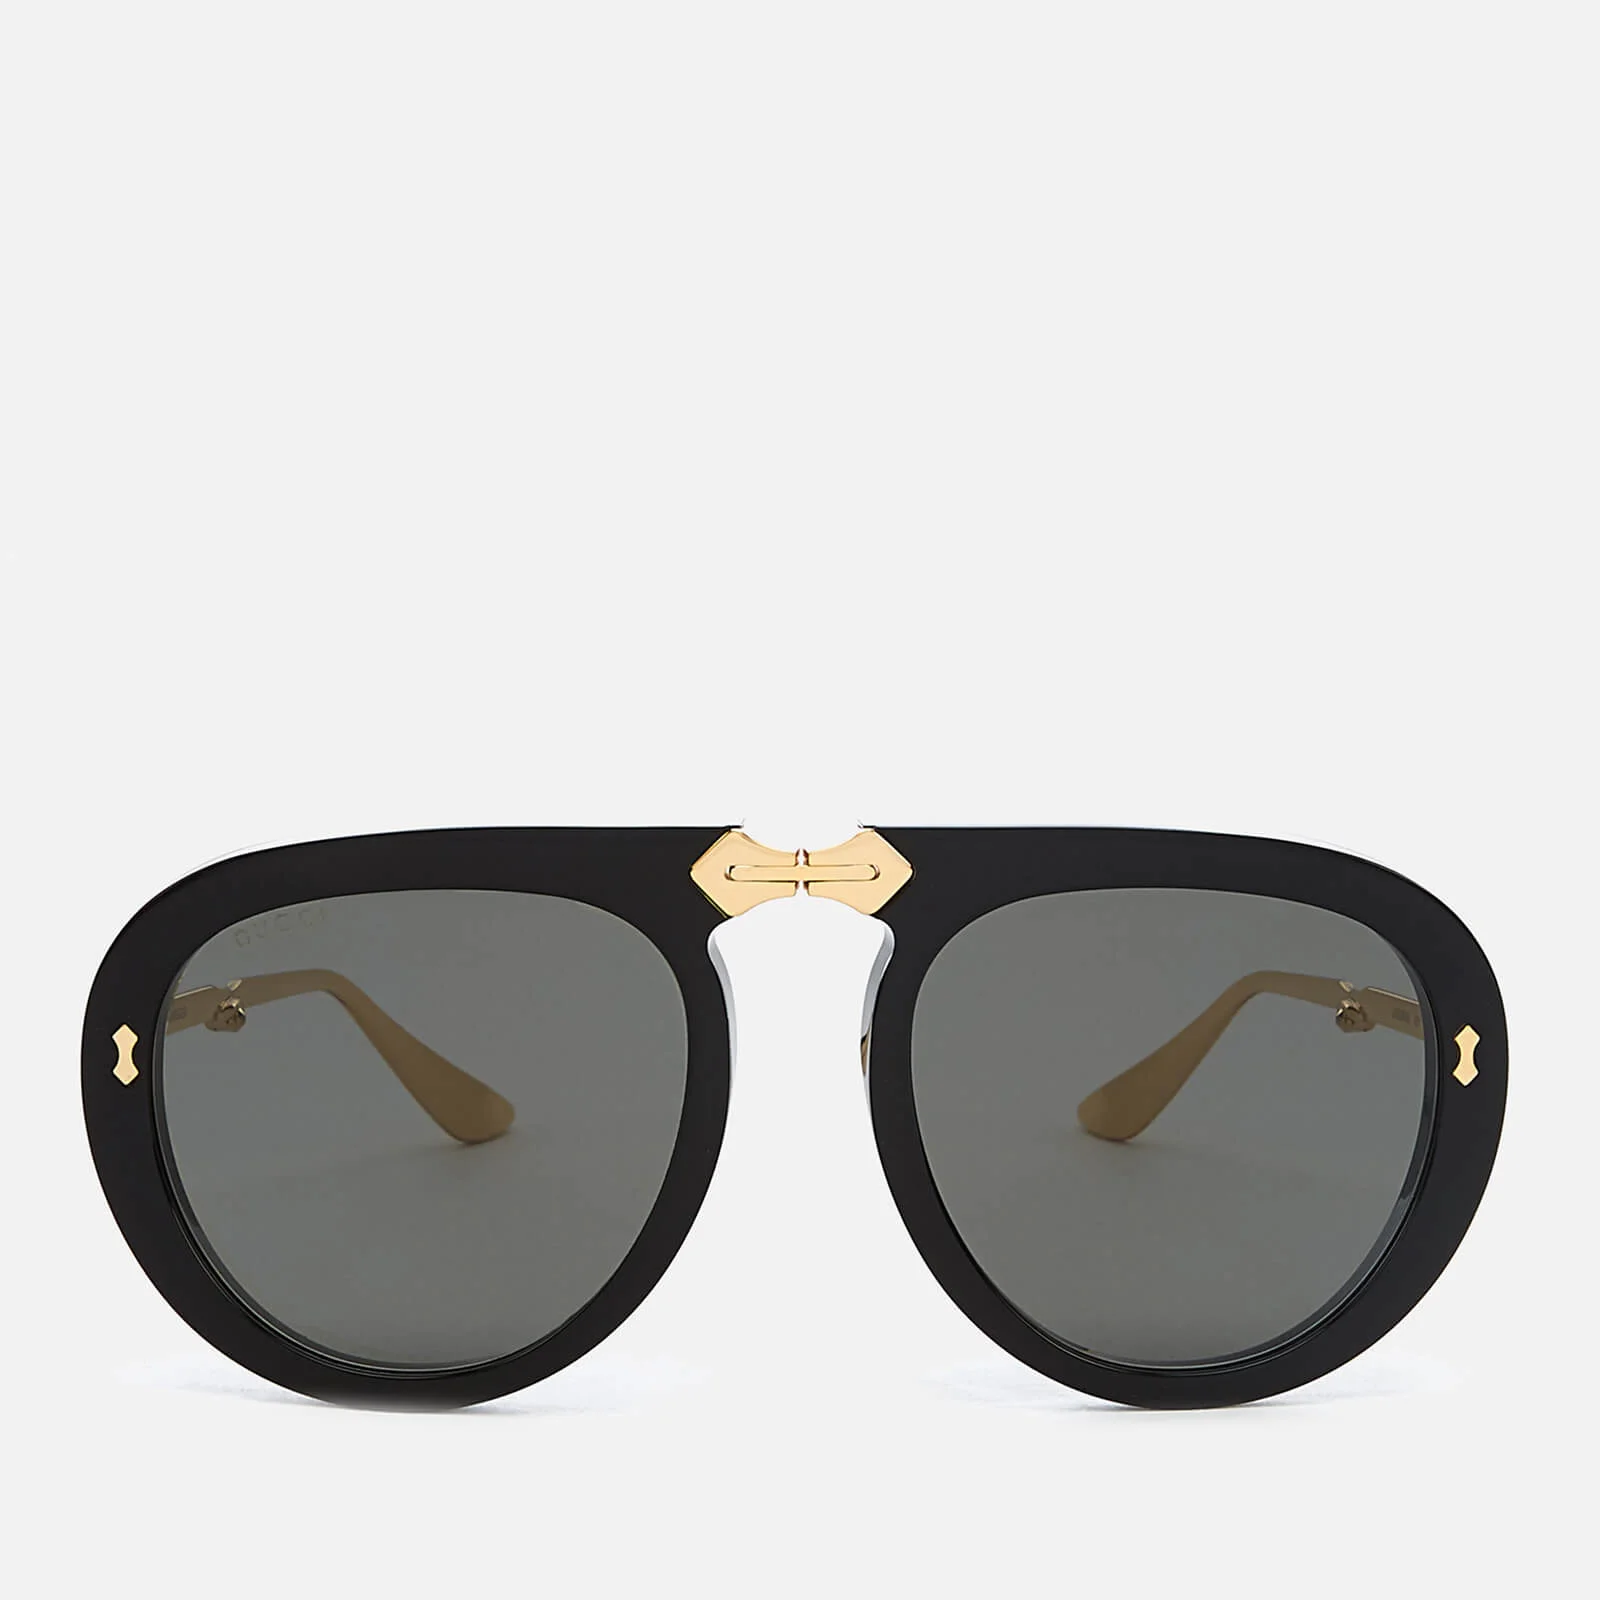 Gucci Women's Acetate Sunglasses - Black/Gold/Grey Image 1